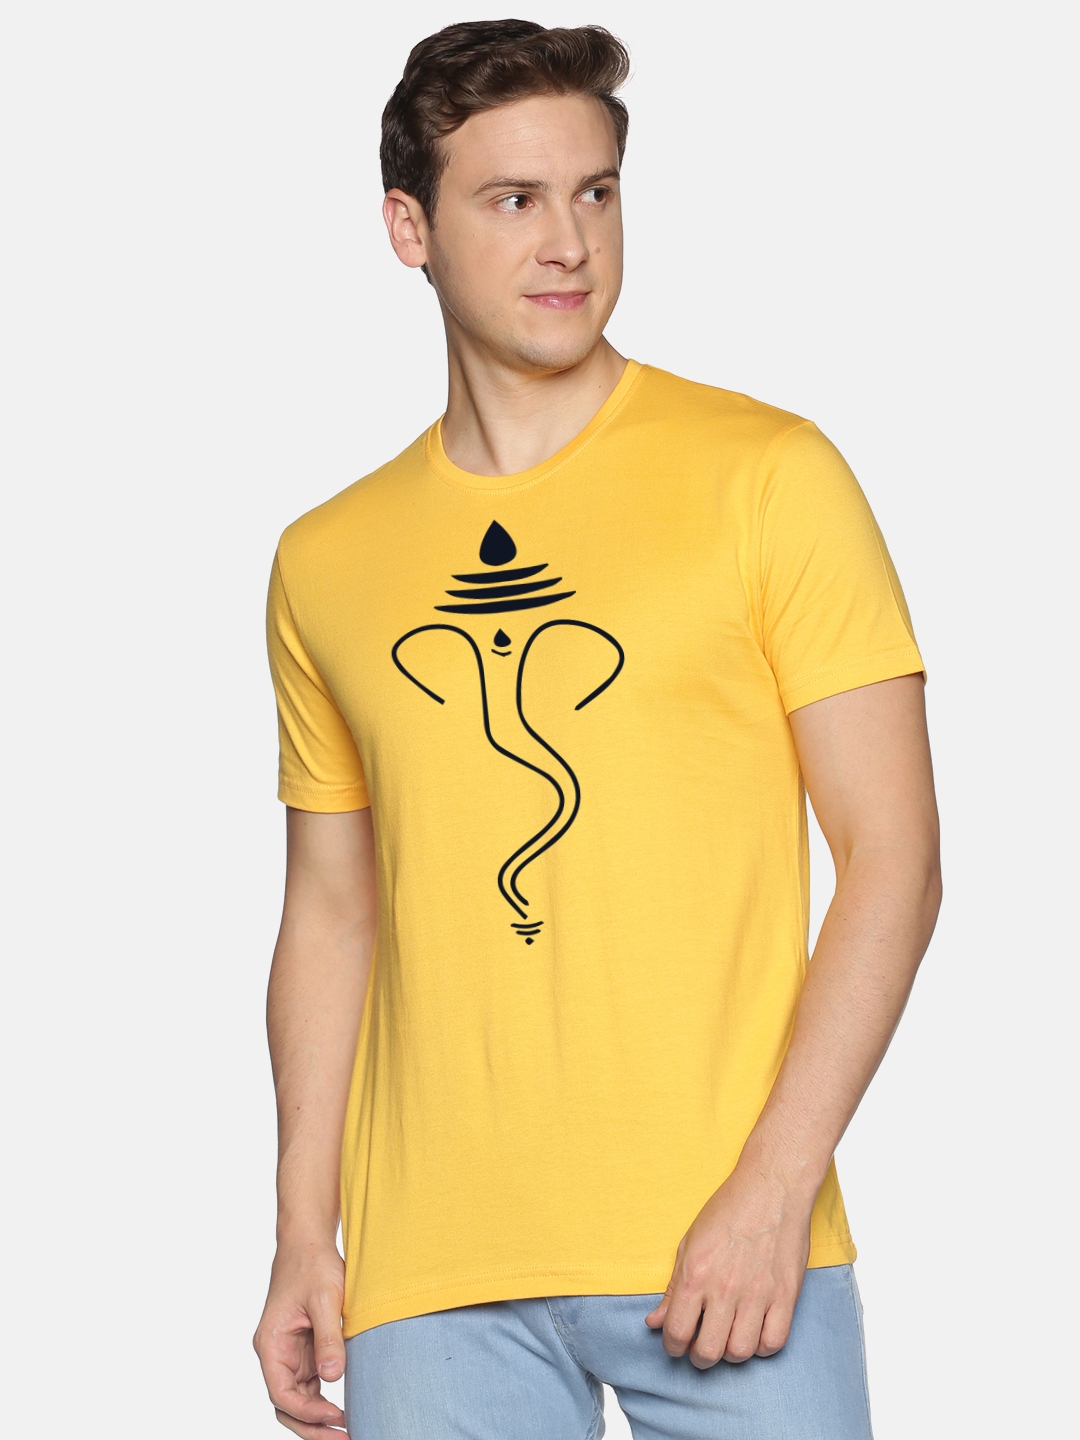 BLACK RADIO Men's Slim Fit Printed Yellow T shirt